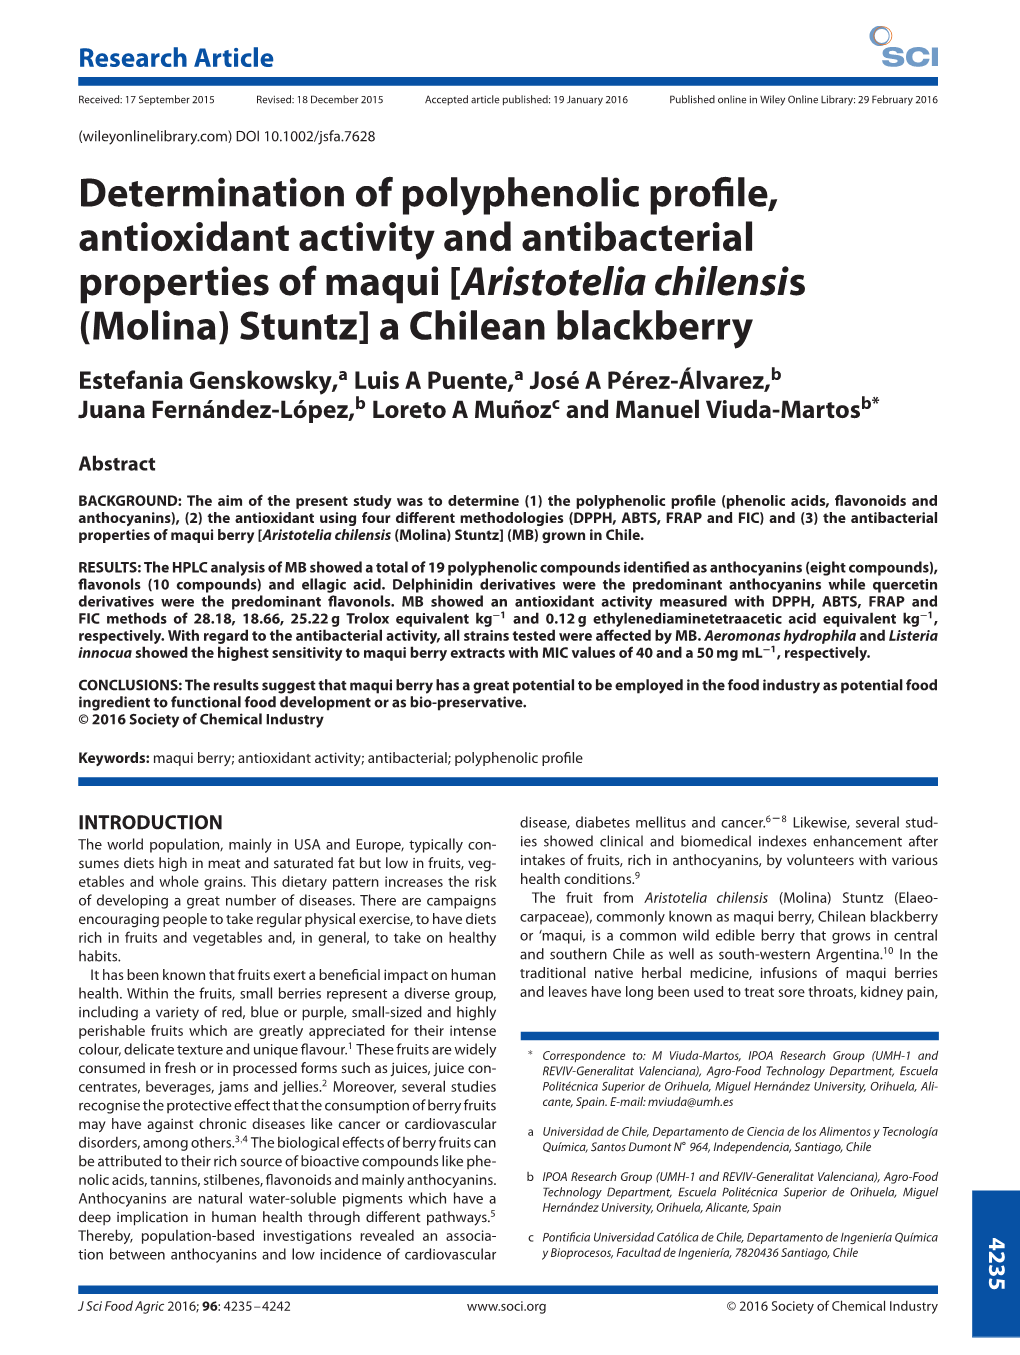 Determination of Polyphenolic Profile, Antioxidant Activity and Antibacterial